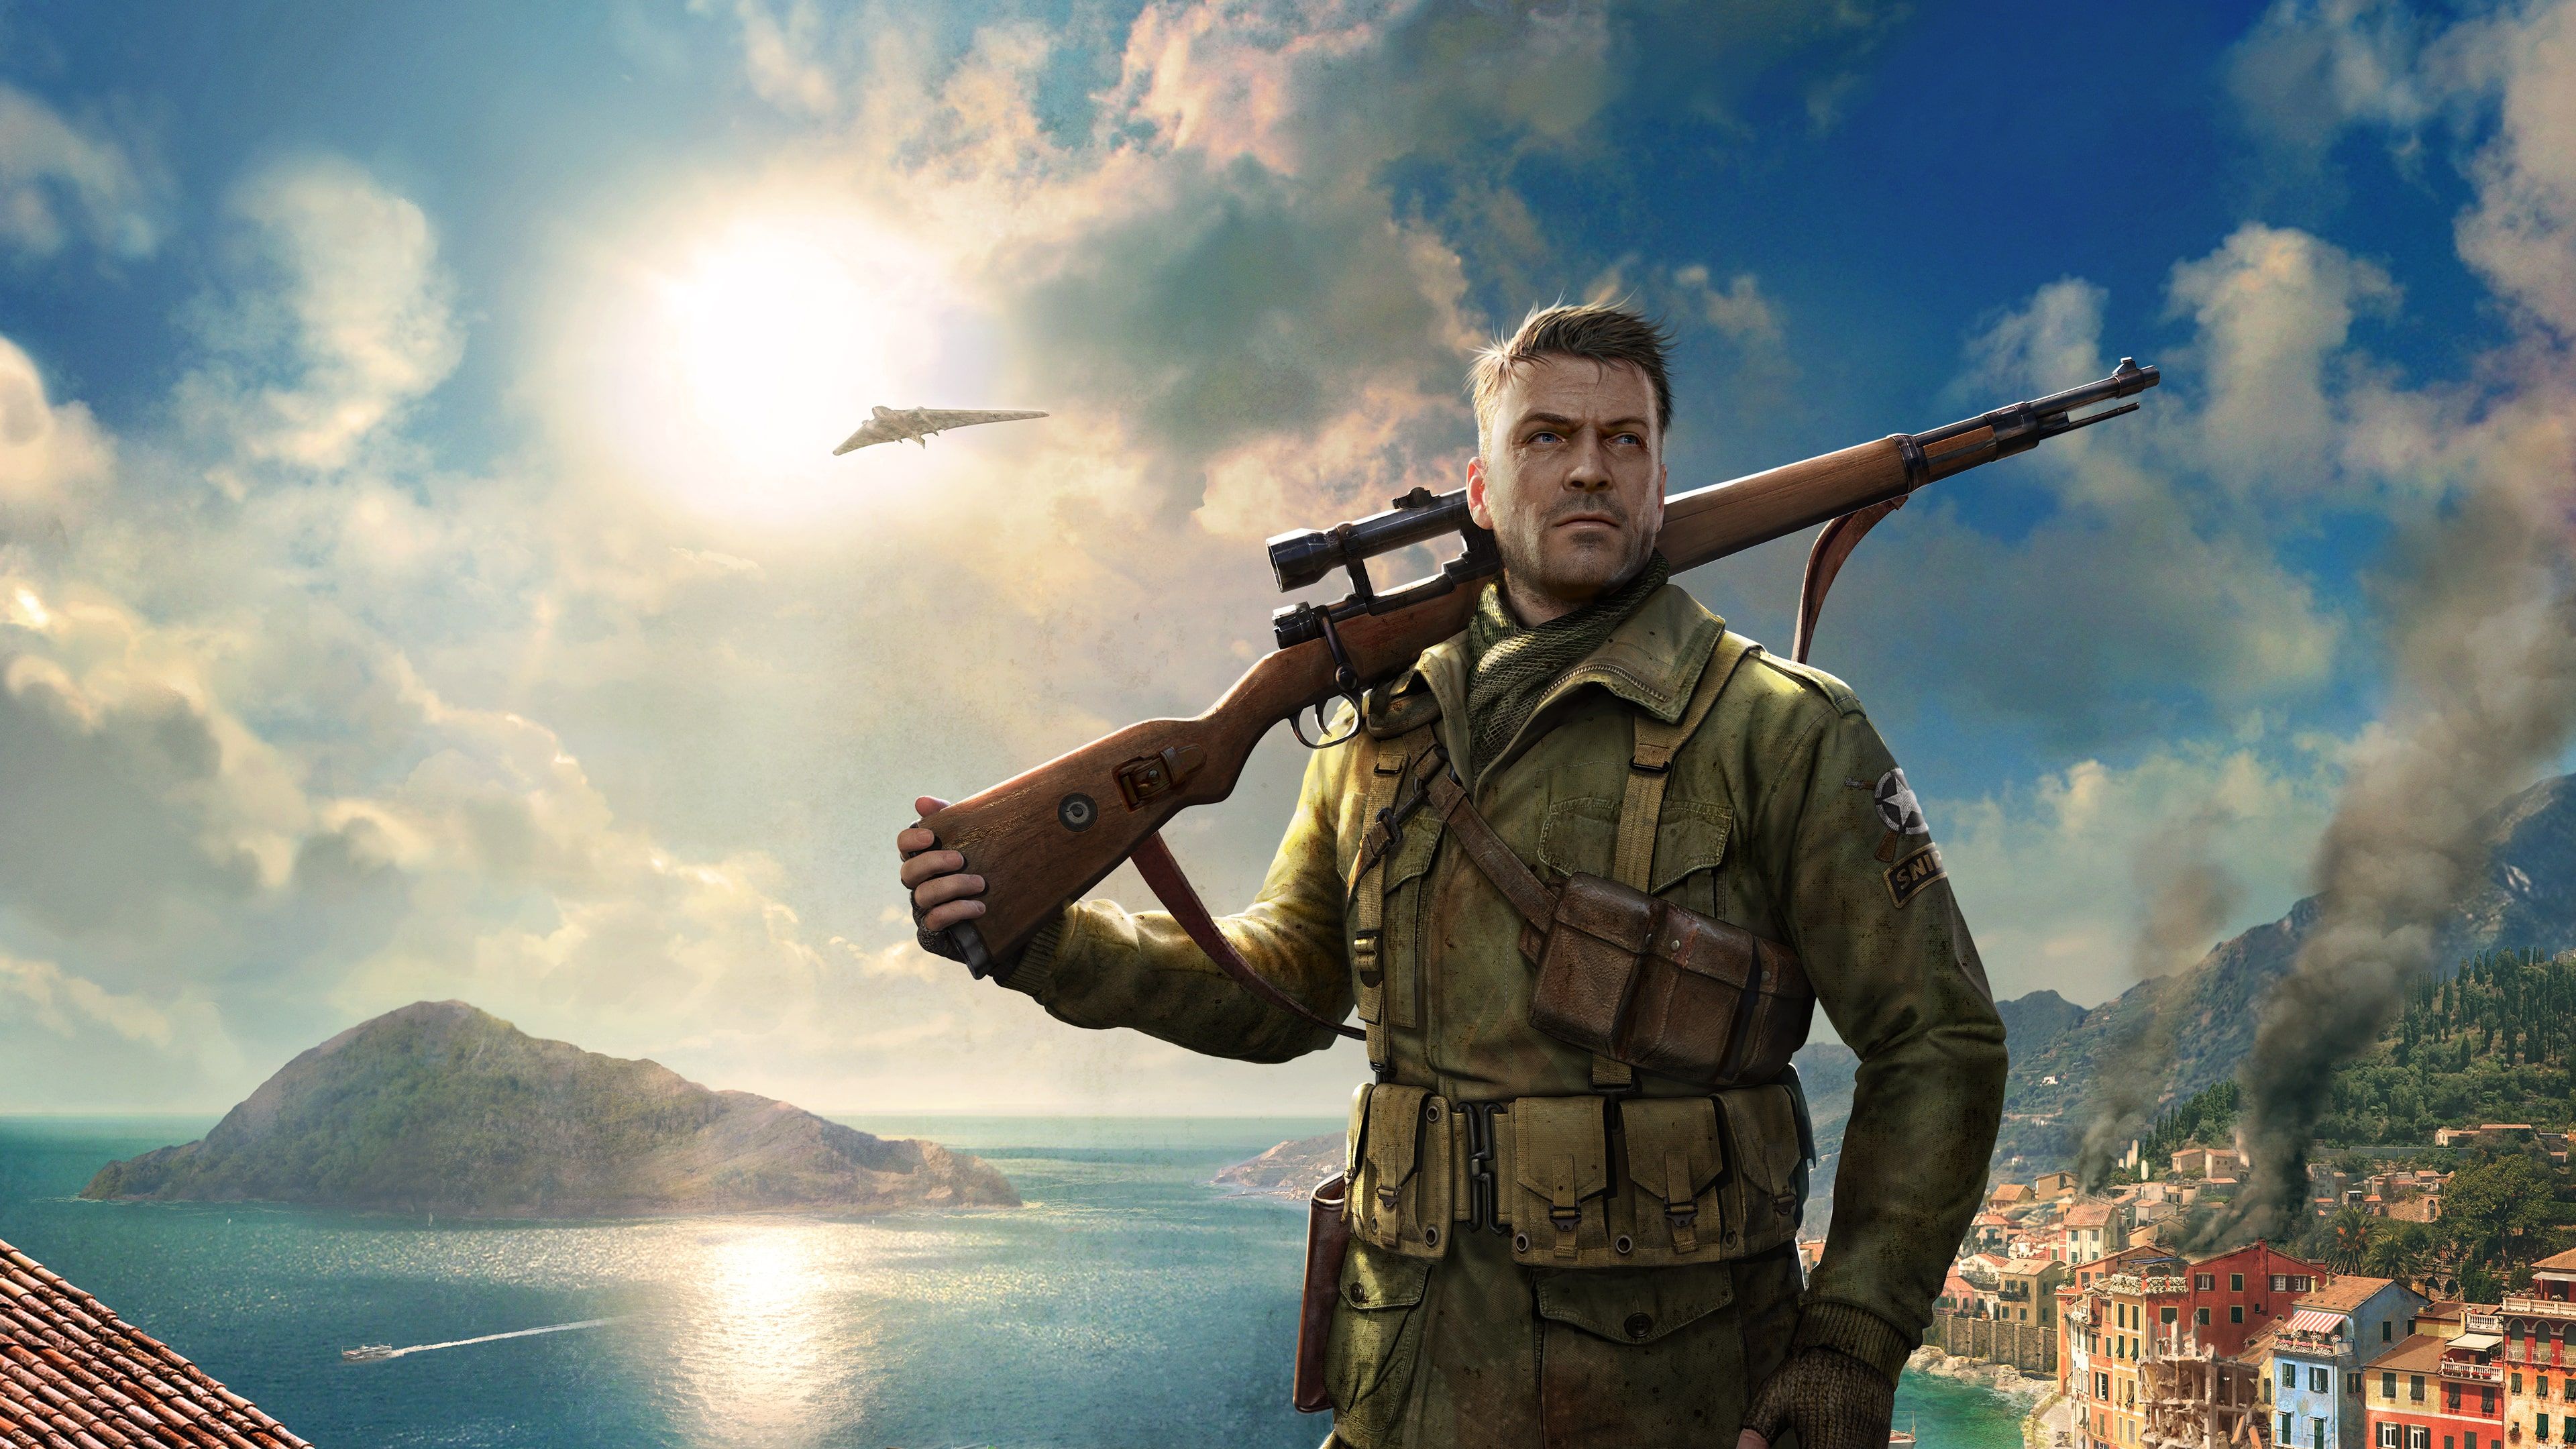 Sniper Elite 4 cover image